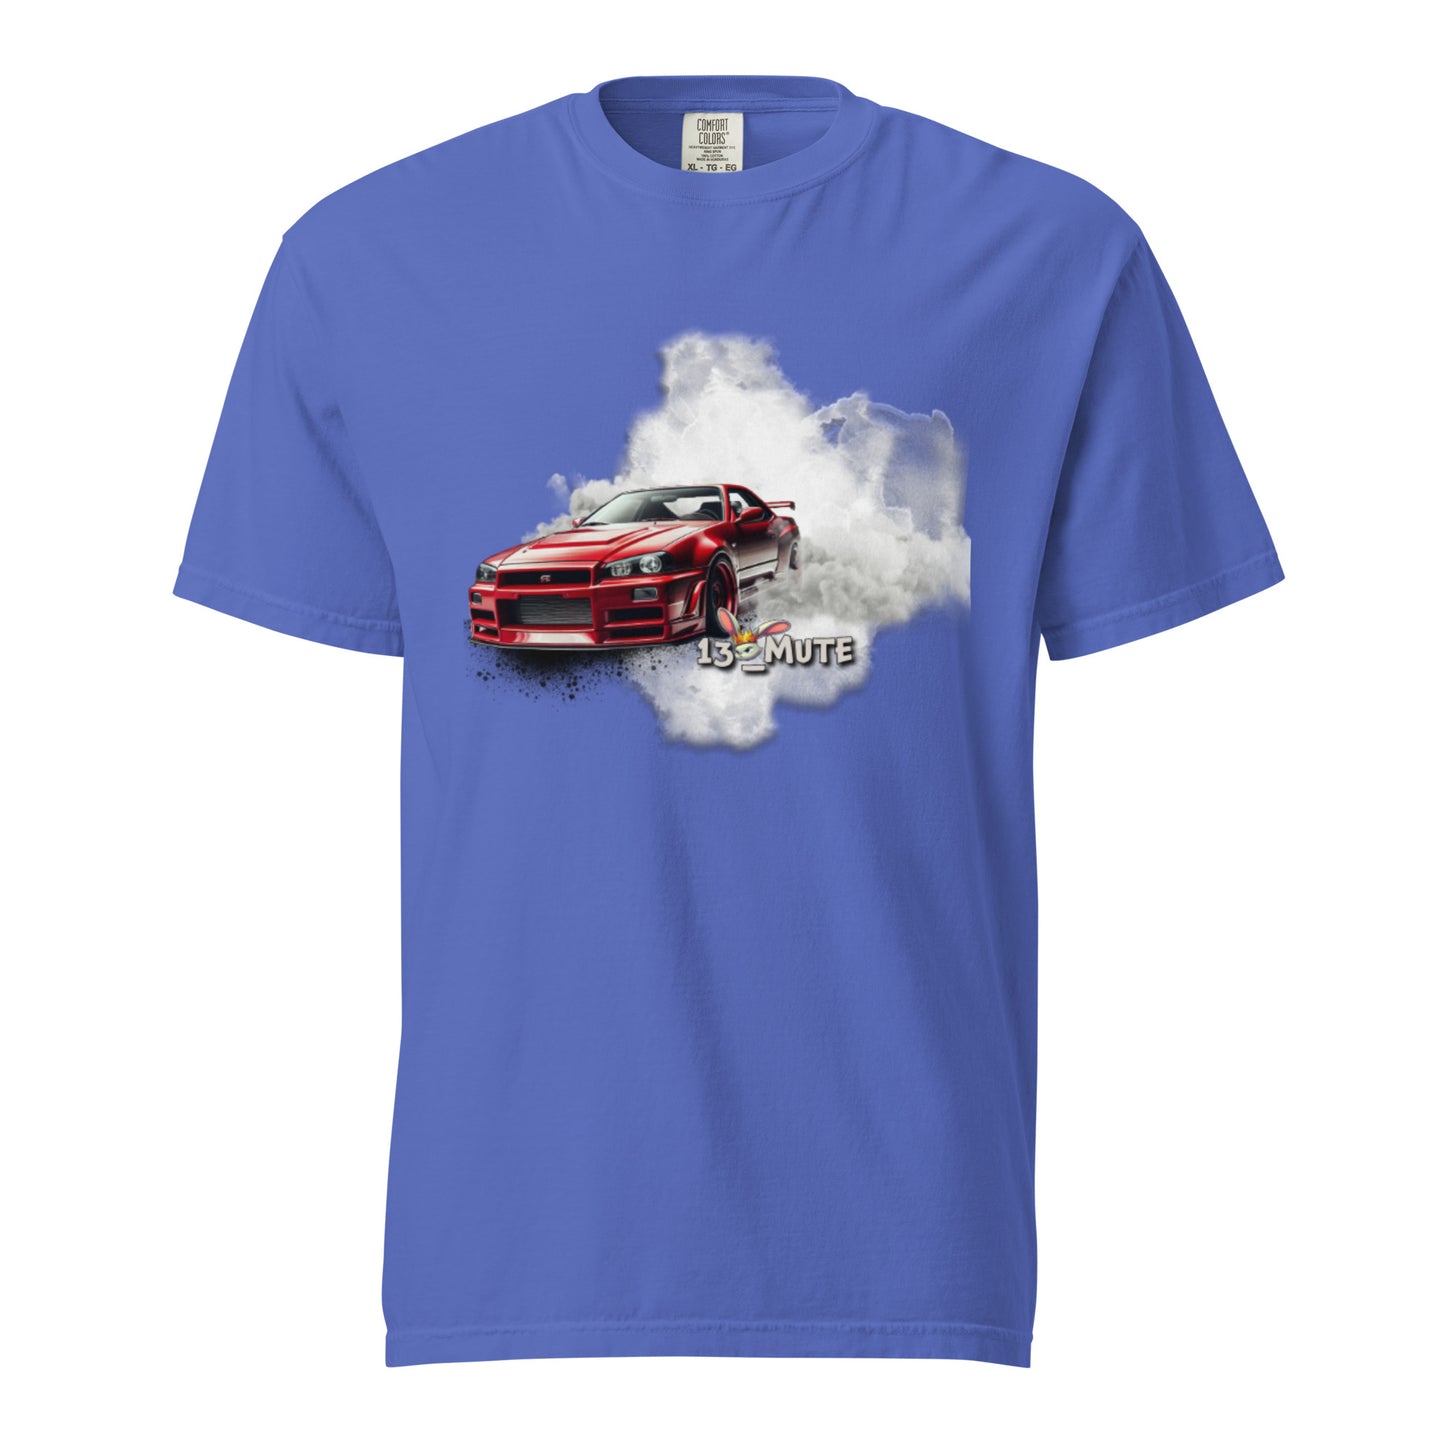 iconic Nissan R34 racing t-shirt